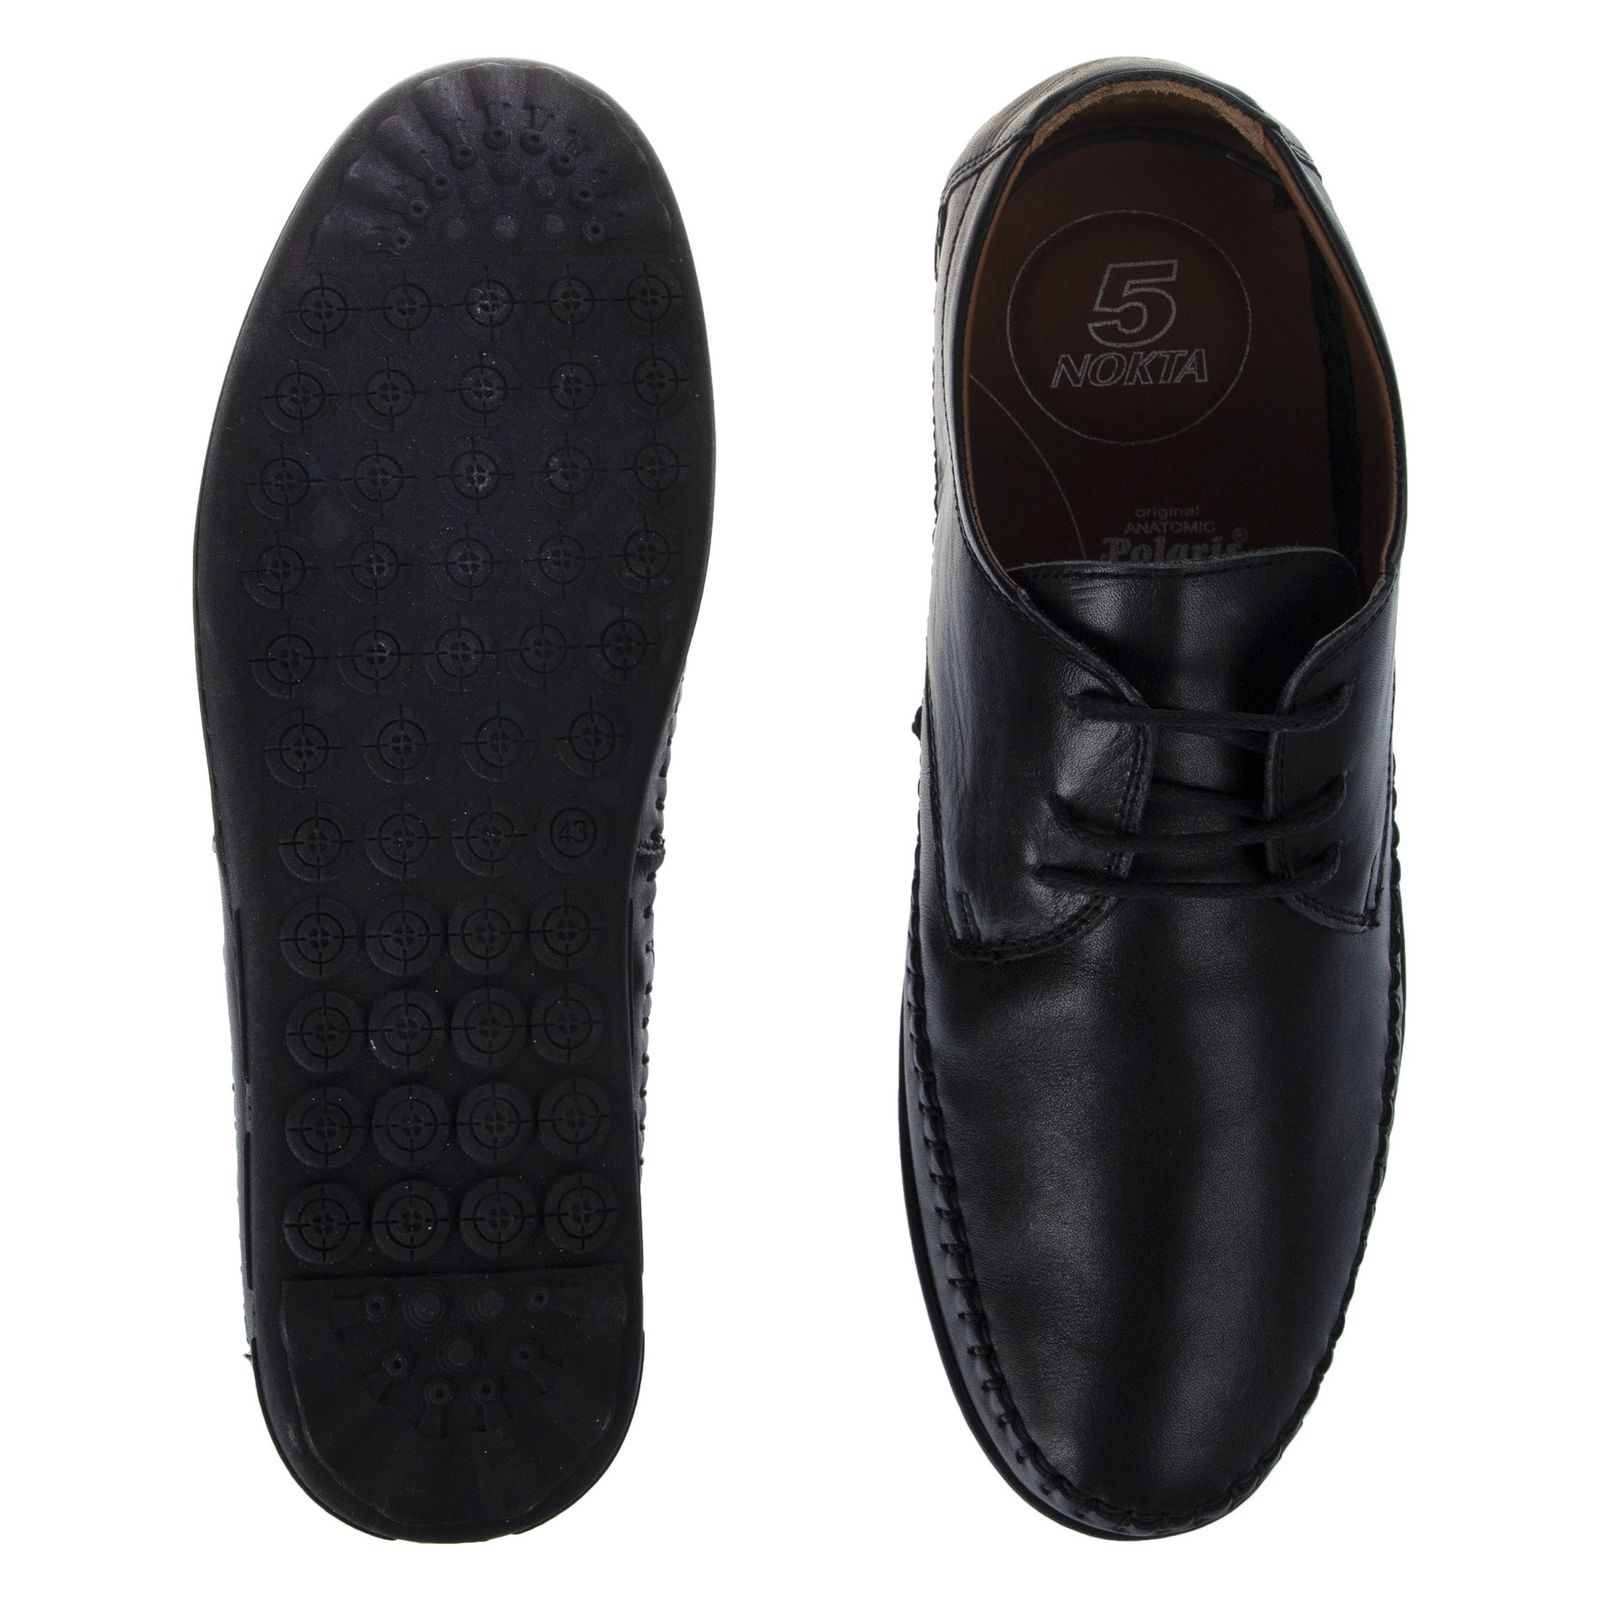 کفش روزمره مردانه پولاریس مدل 100296999-101 - مشکی - 6